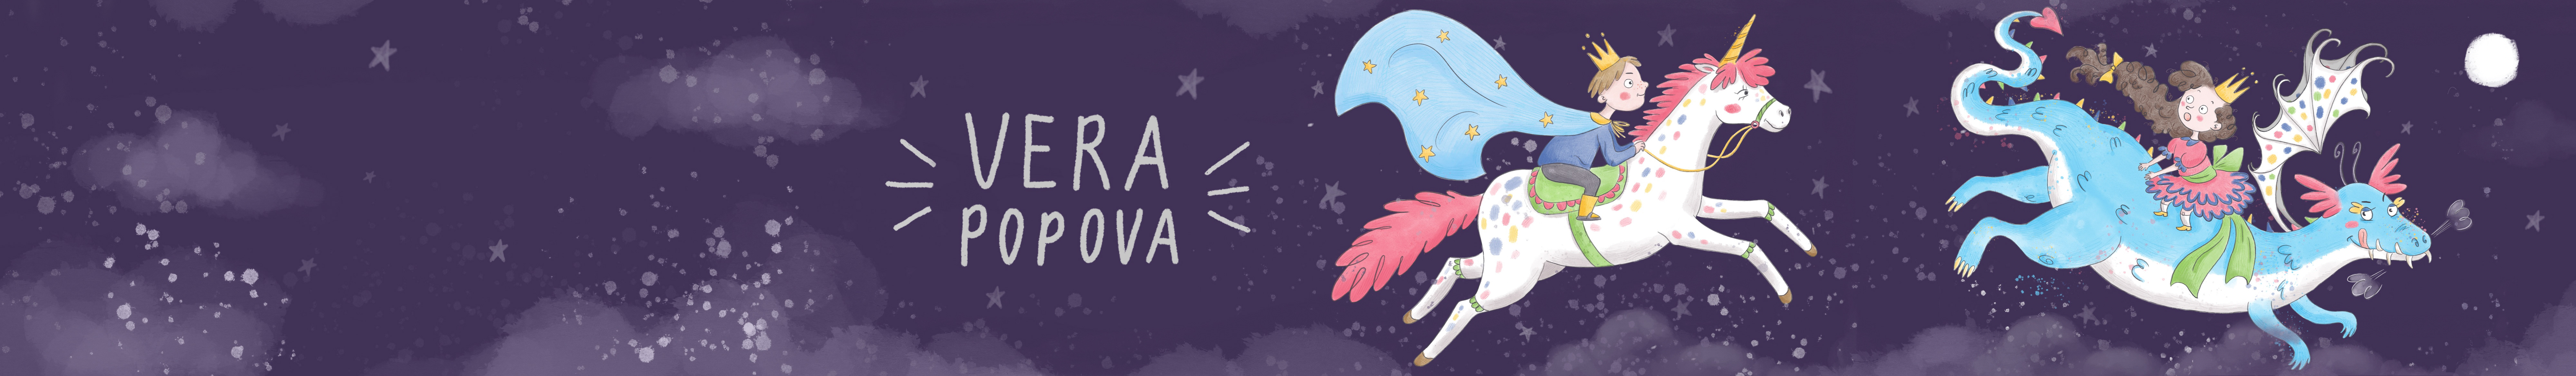 Bannière de profil de Vera Popova